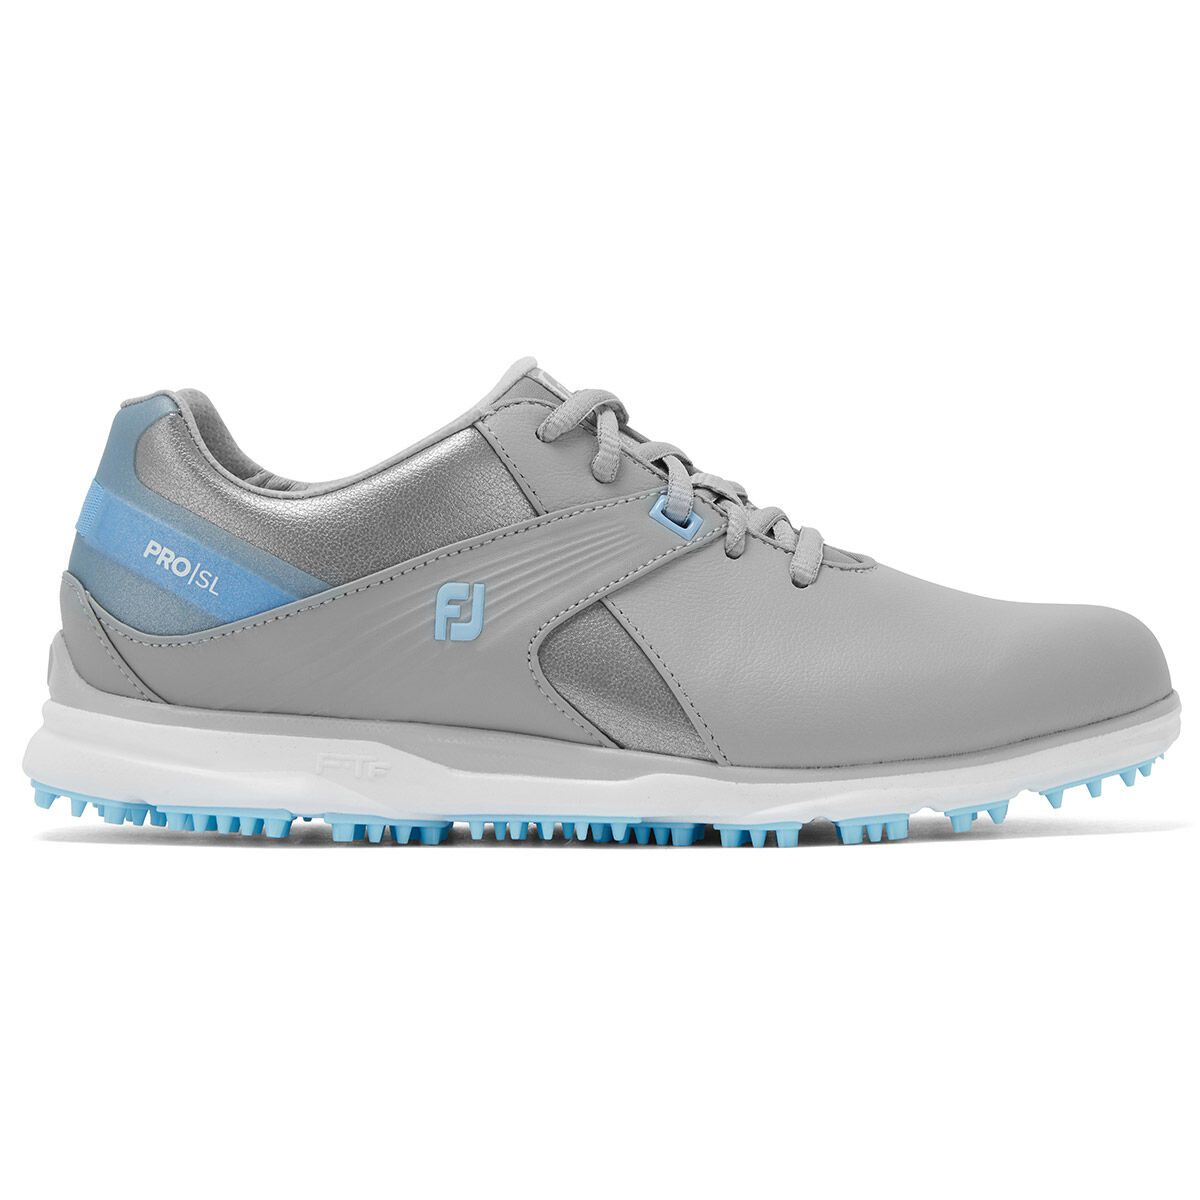 Chaussures FootJoy Pro SL pour femmes, femme, 4, Grey/lt blue, Large | Online Golf